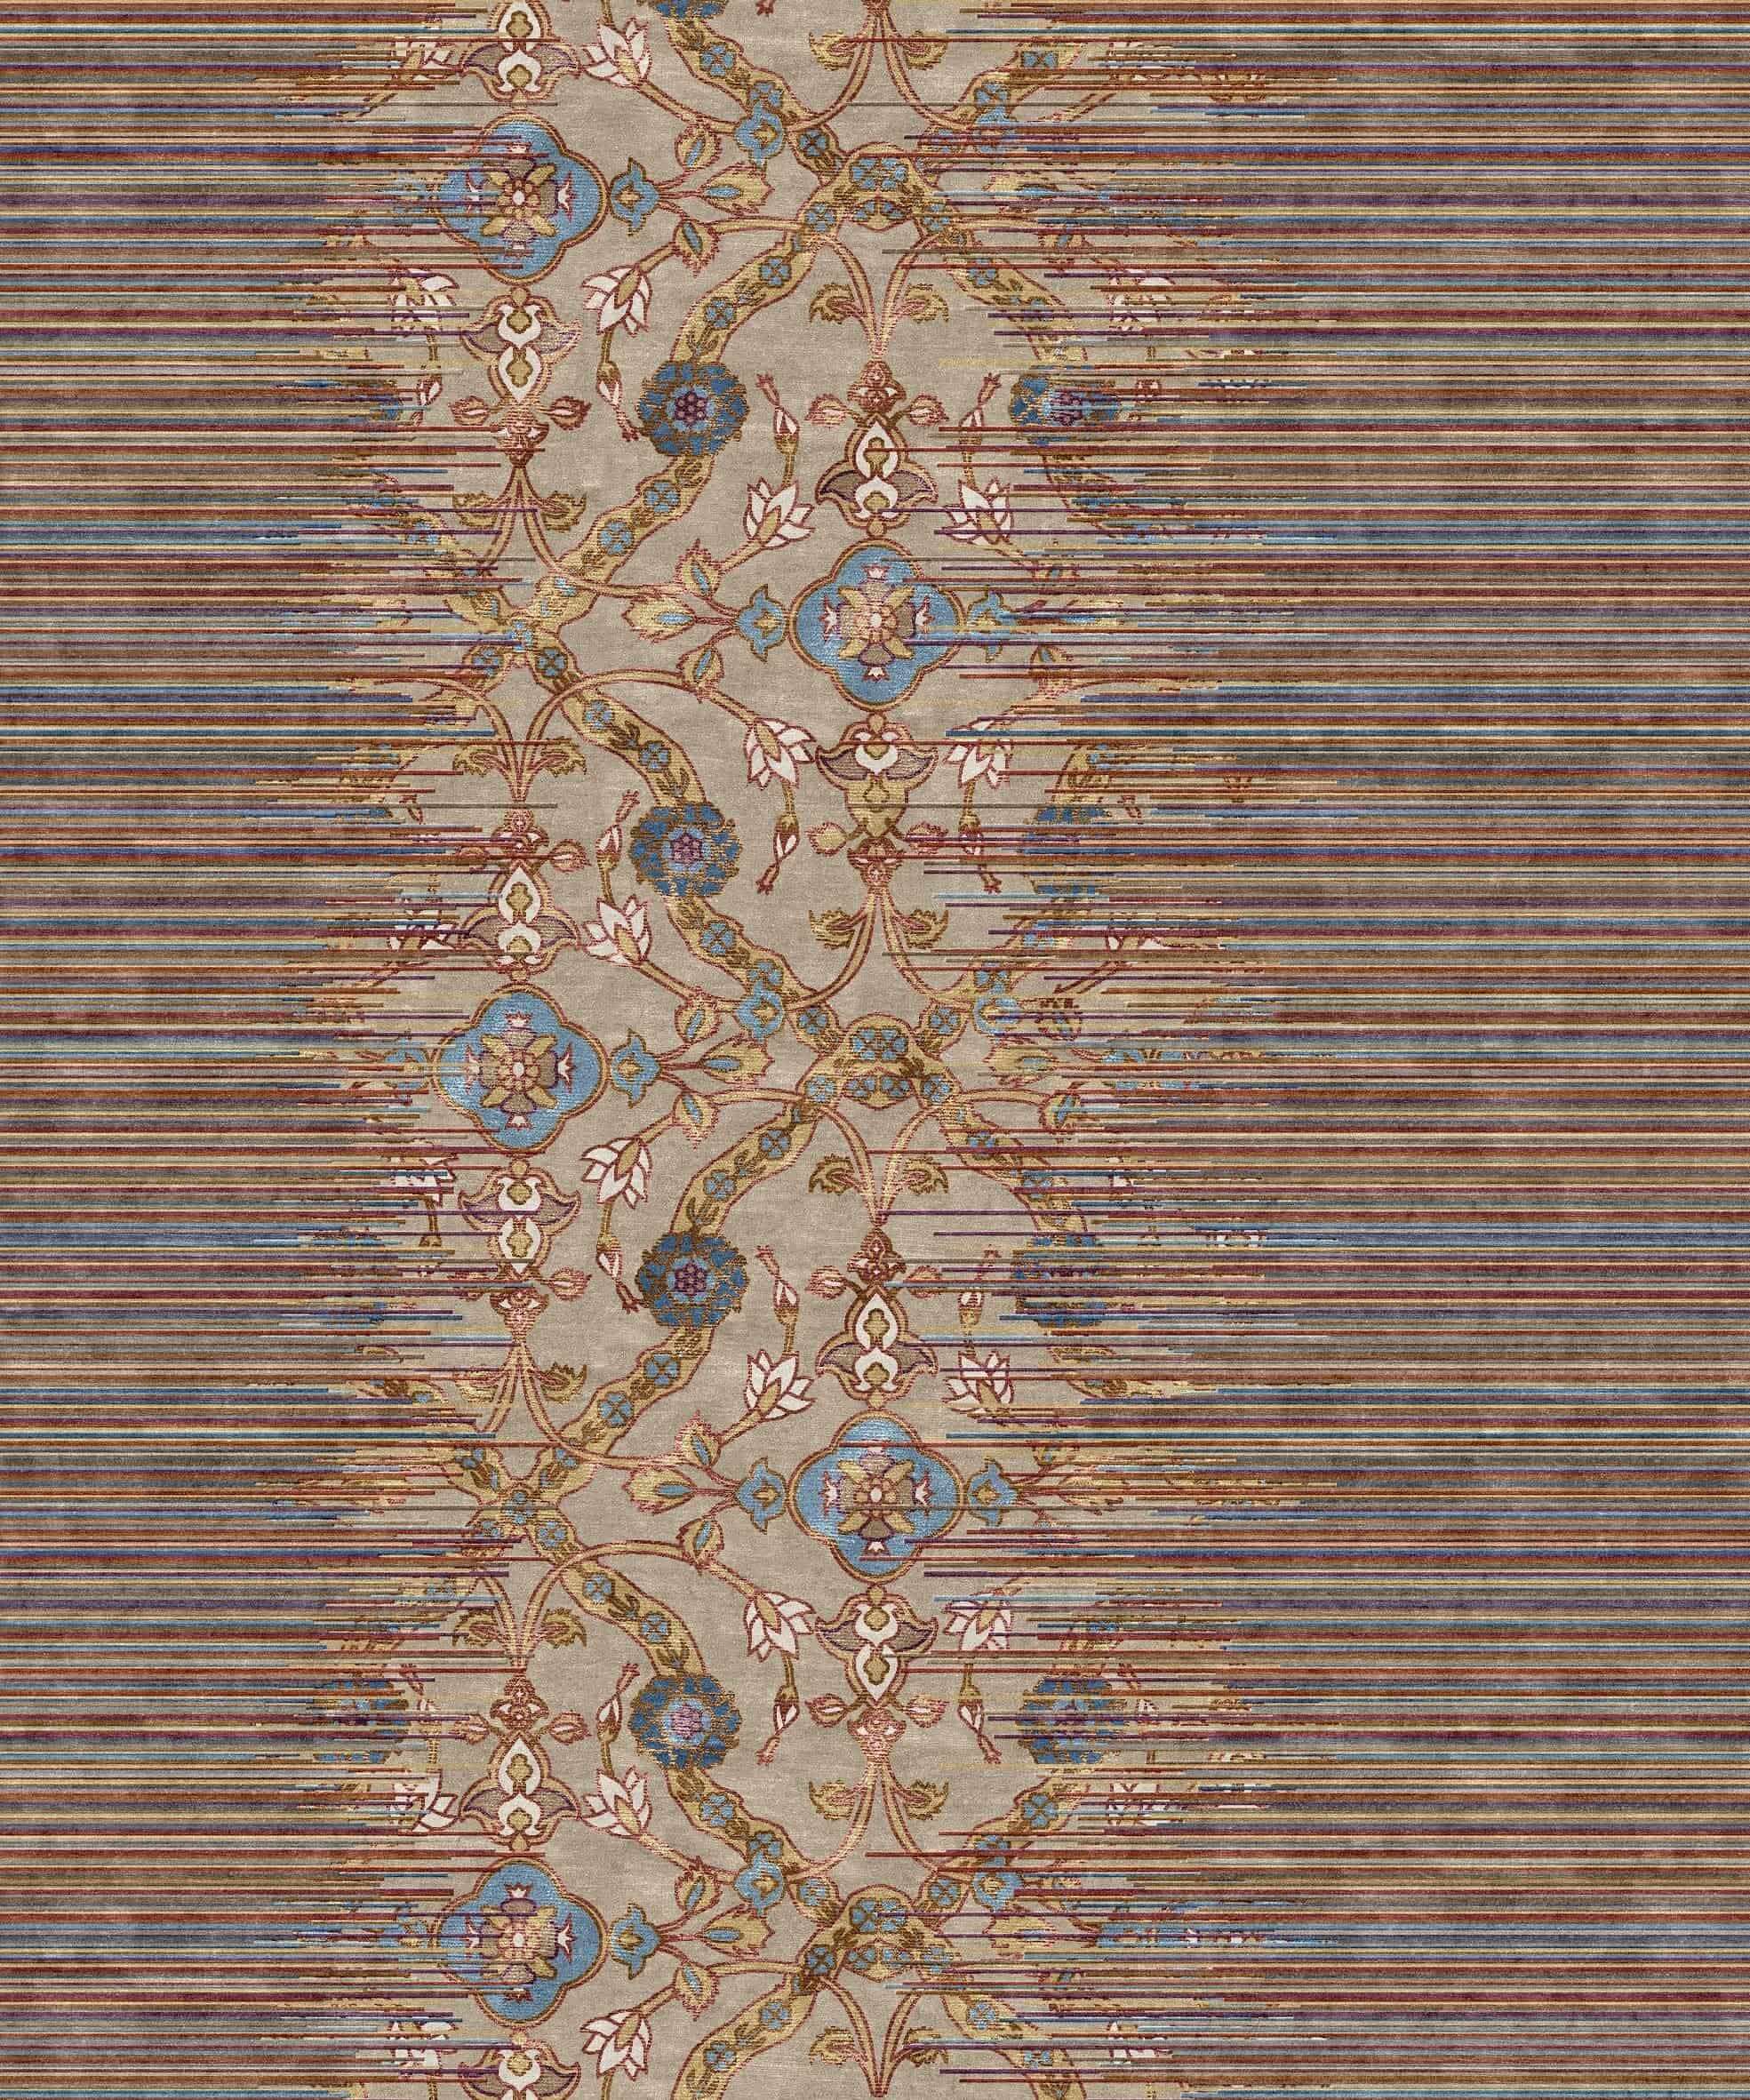 Makalu Nepal Teppich Antique M313 Handgeknüpft im Wunschmaß 